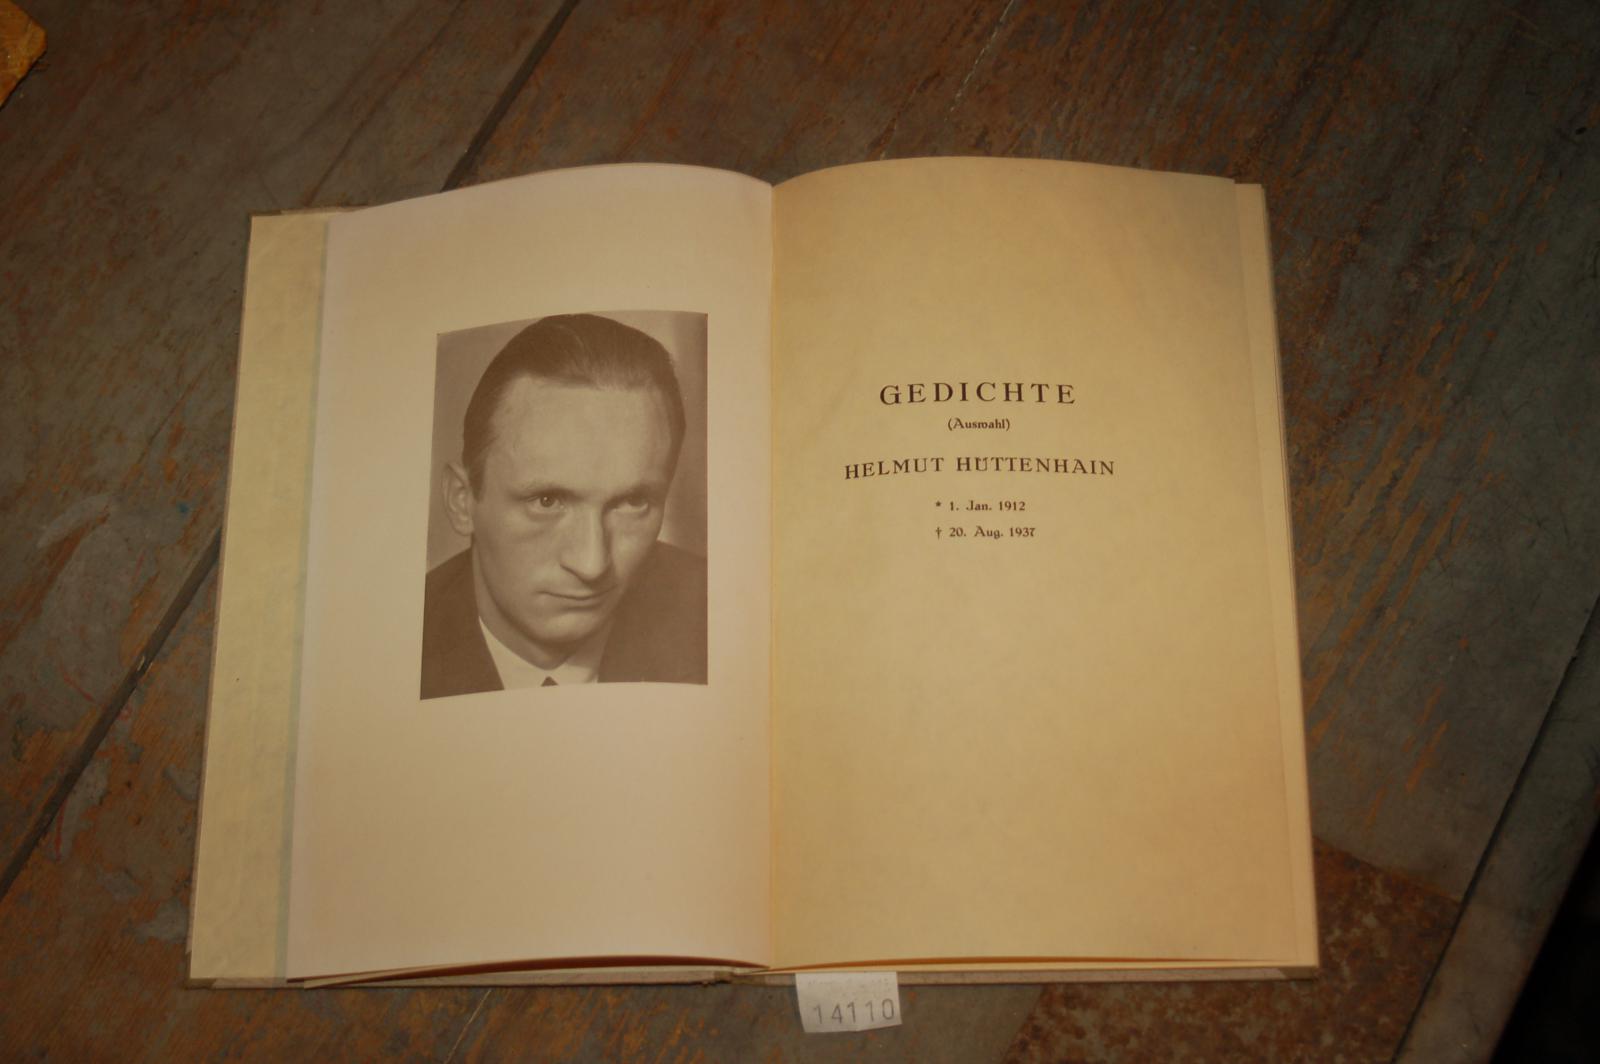 Hüttenhain Helmut  Gedichte (Auswahl)   Helmut Hüttenhain geb. 1. Jan. 1912  gest. 20. Aug. 1937 